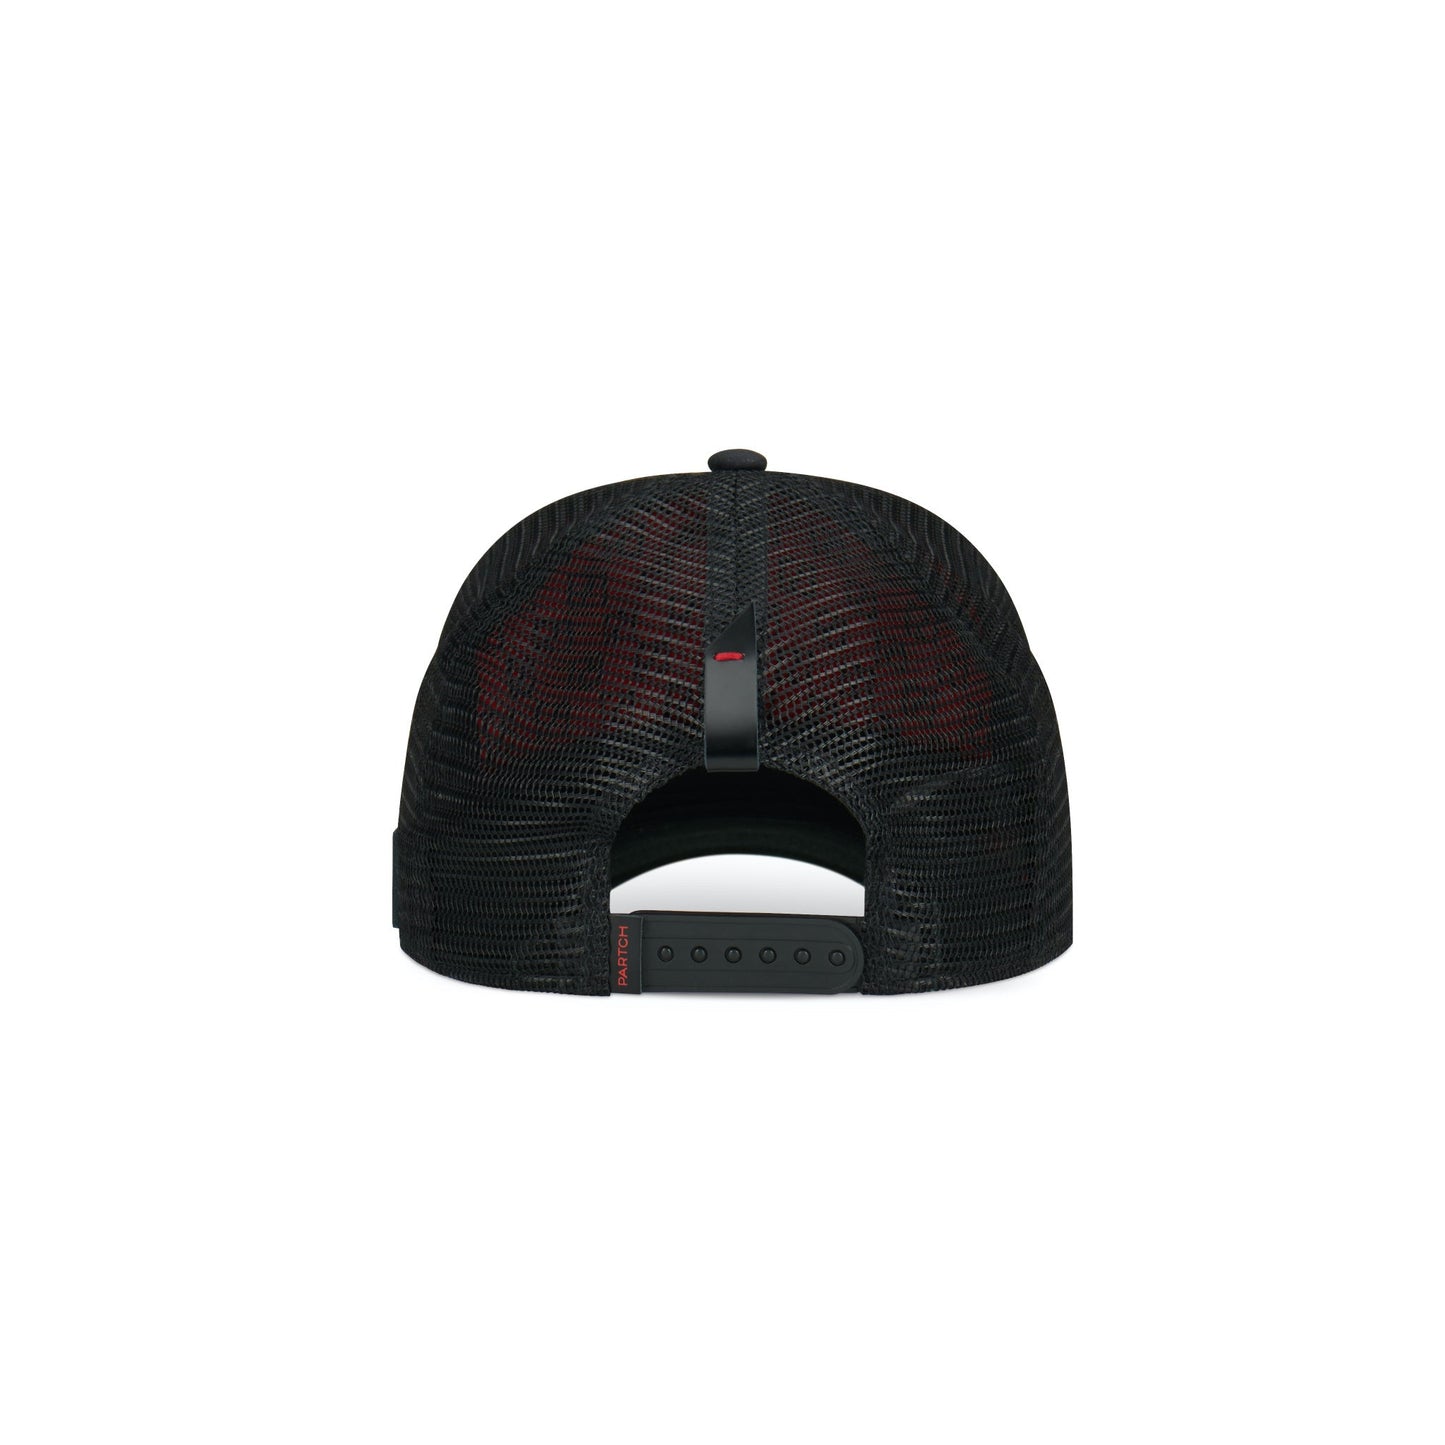 Partch Trucker Hat Black with PARTCH-Clip Pop Love Back View